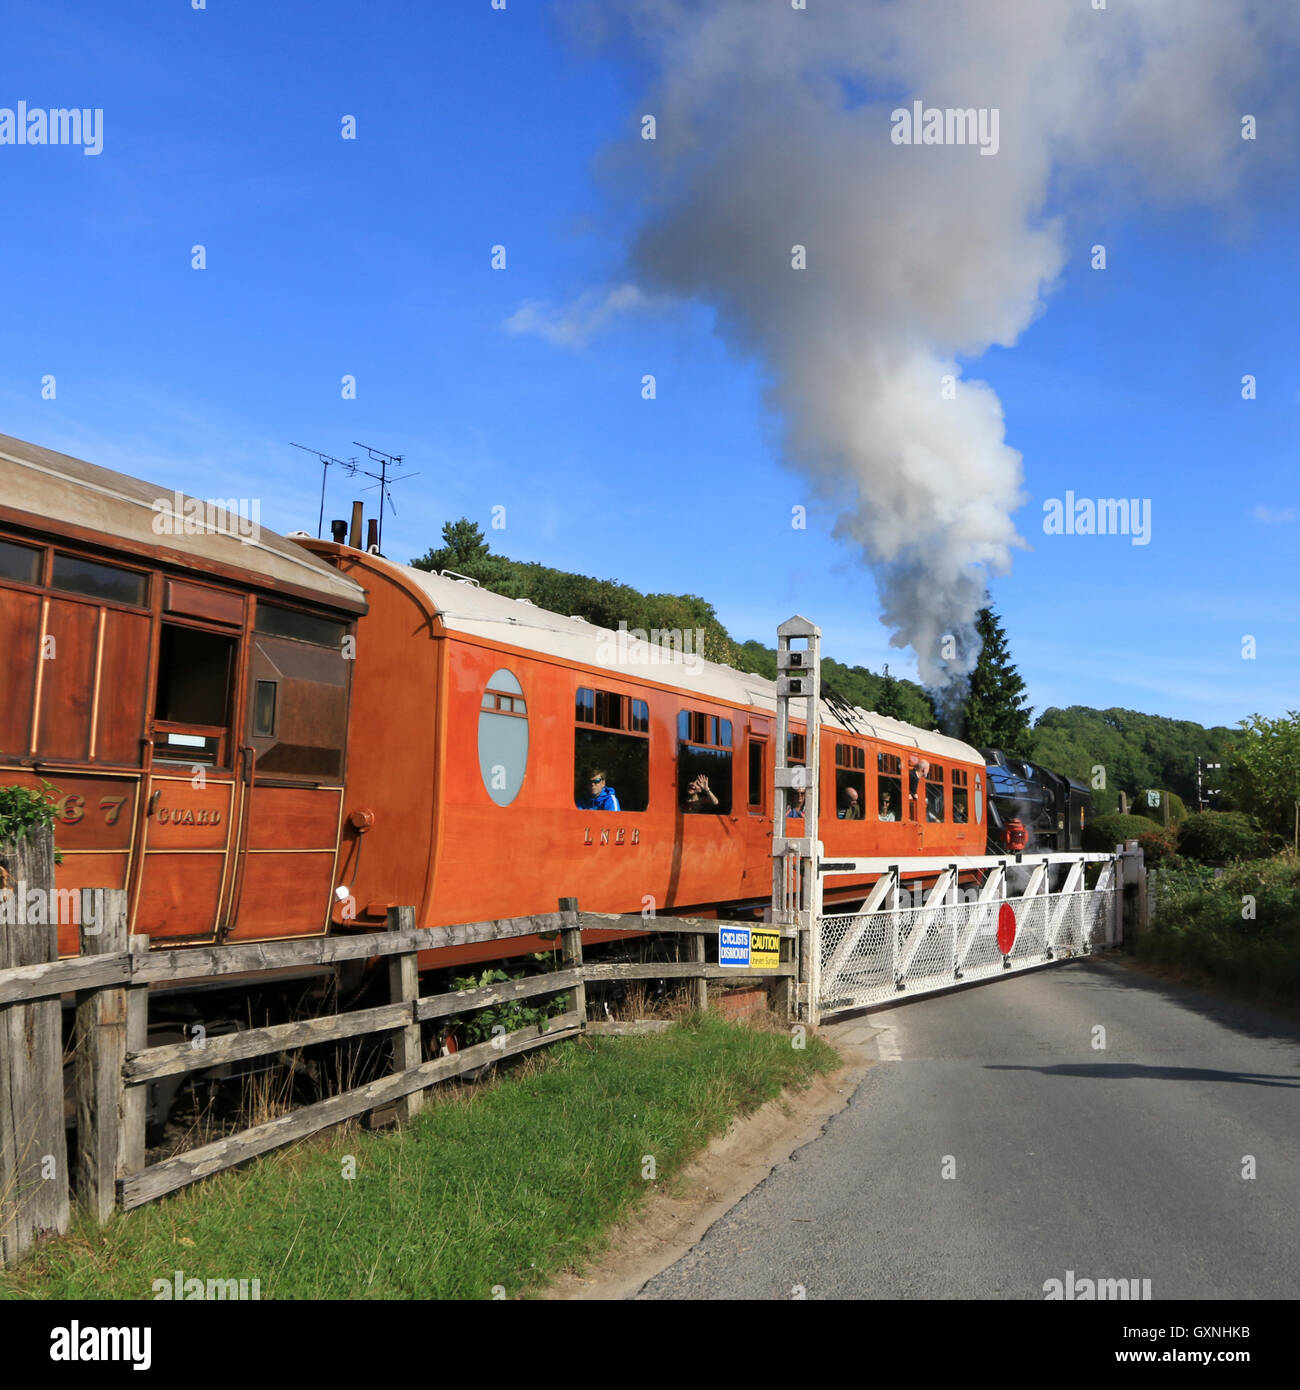 Train with steam locomotive heading to Whitby on the North York Moors Railway, passing through Newbridge level crossing. Stock Photo